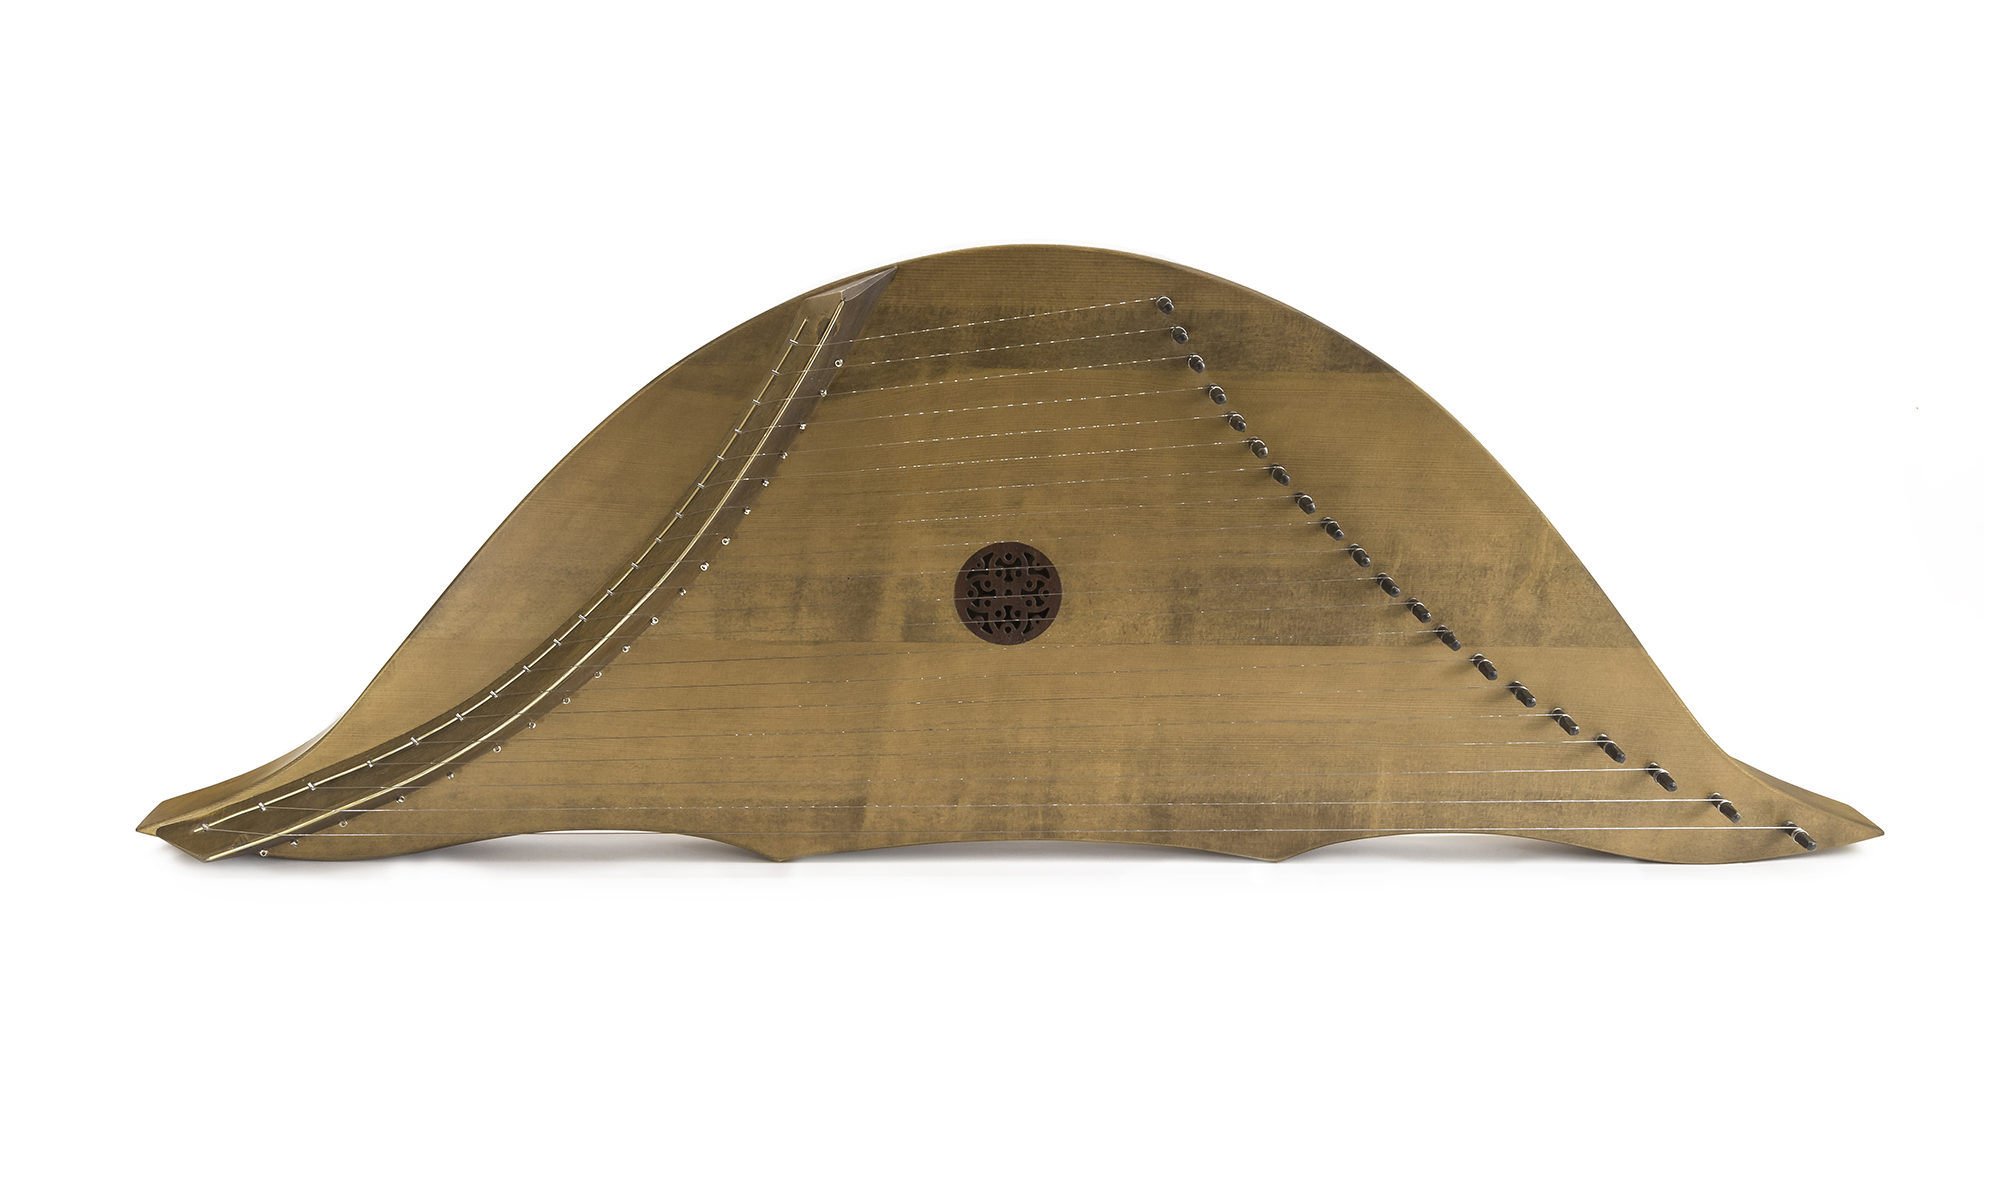 Gusli Spas ancient musical instrument